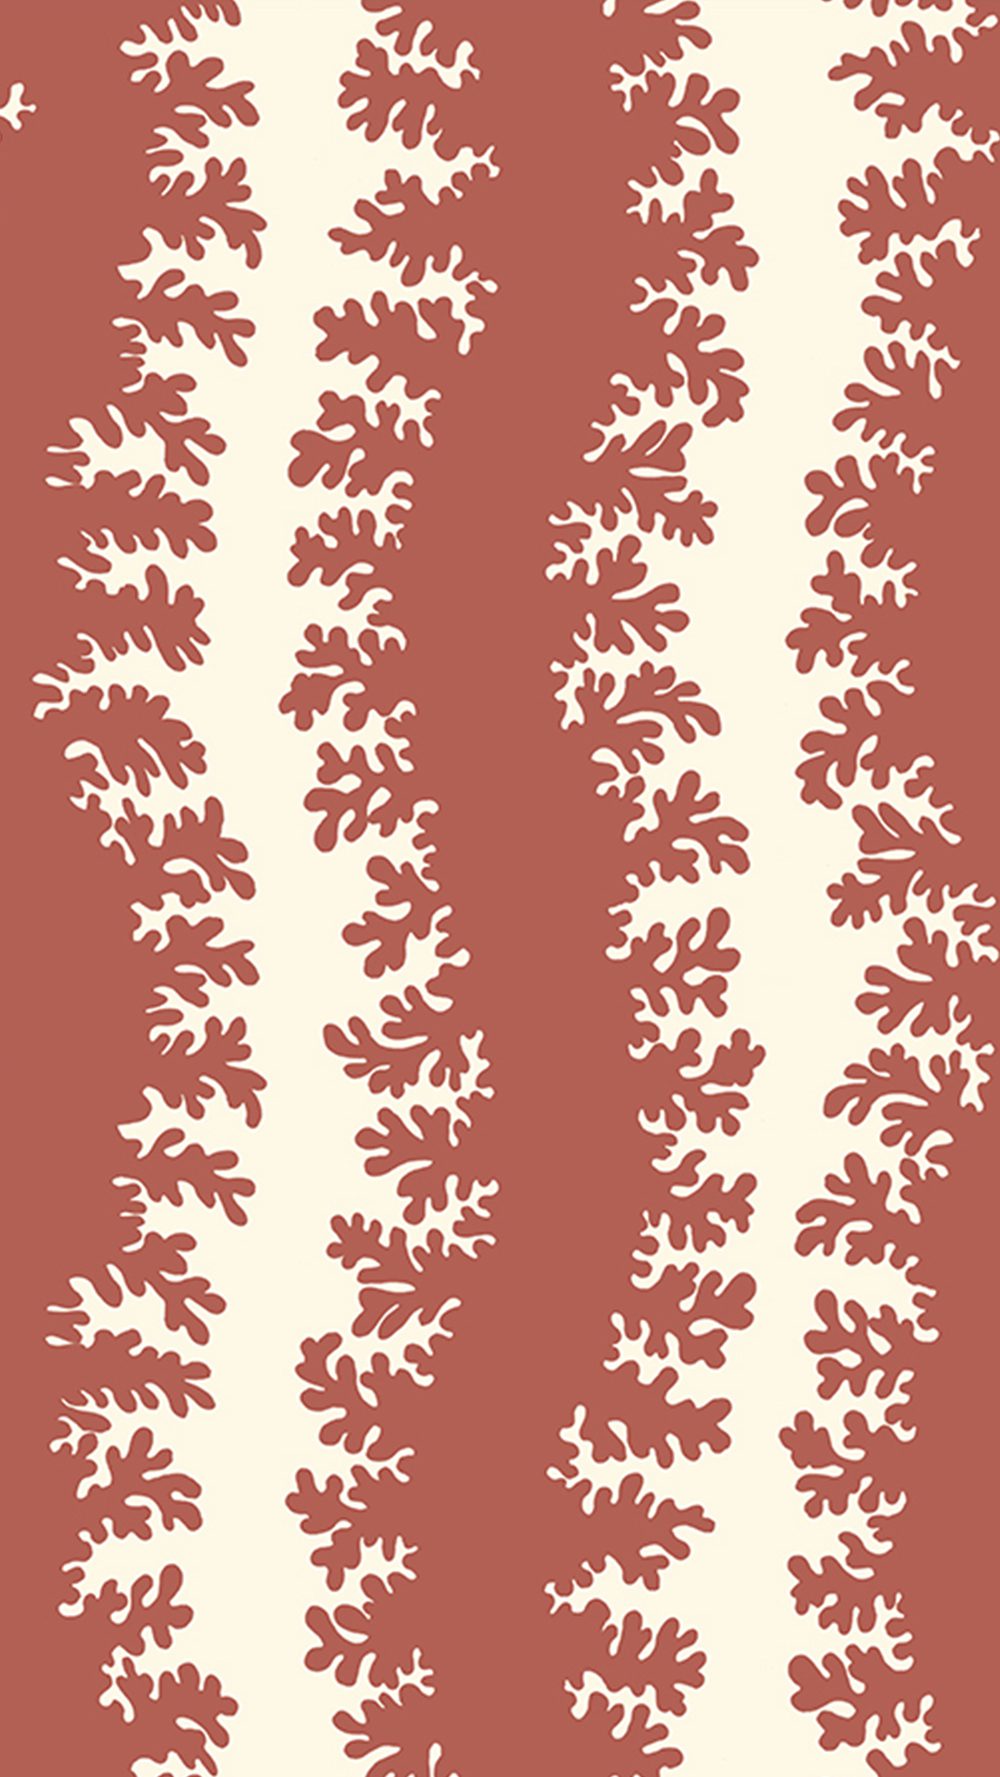 Josephine-Munsey-Roll-collection-wallpaper-elkhorn-strope-scalloped-wave-stripe-wallpaper-elkhork-edged-silhouette-soft-edged-wide-stripe-red-topping-clarke-white